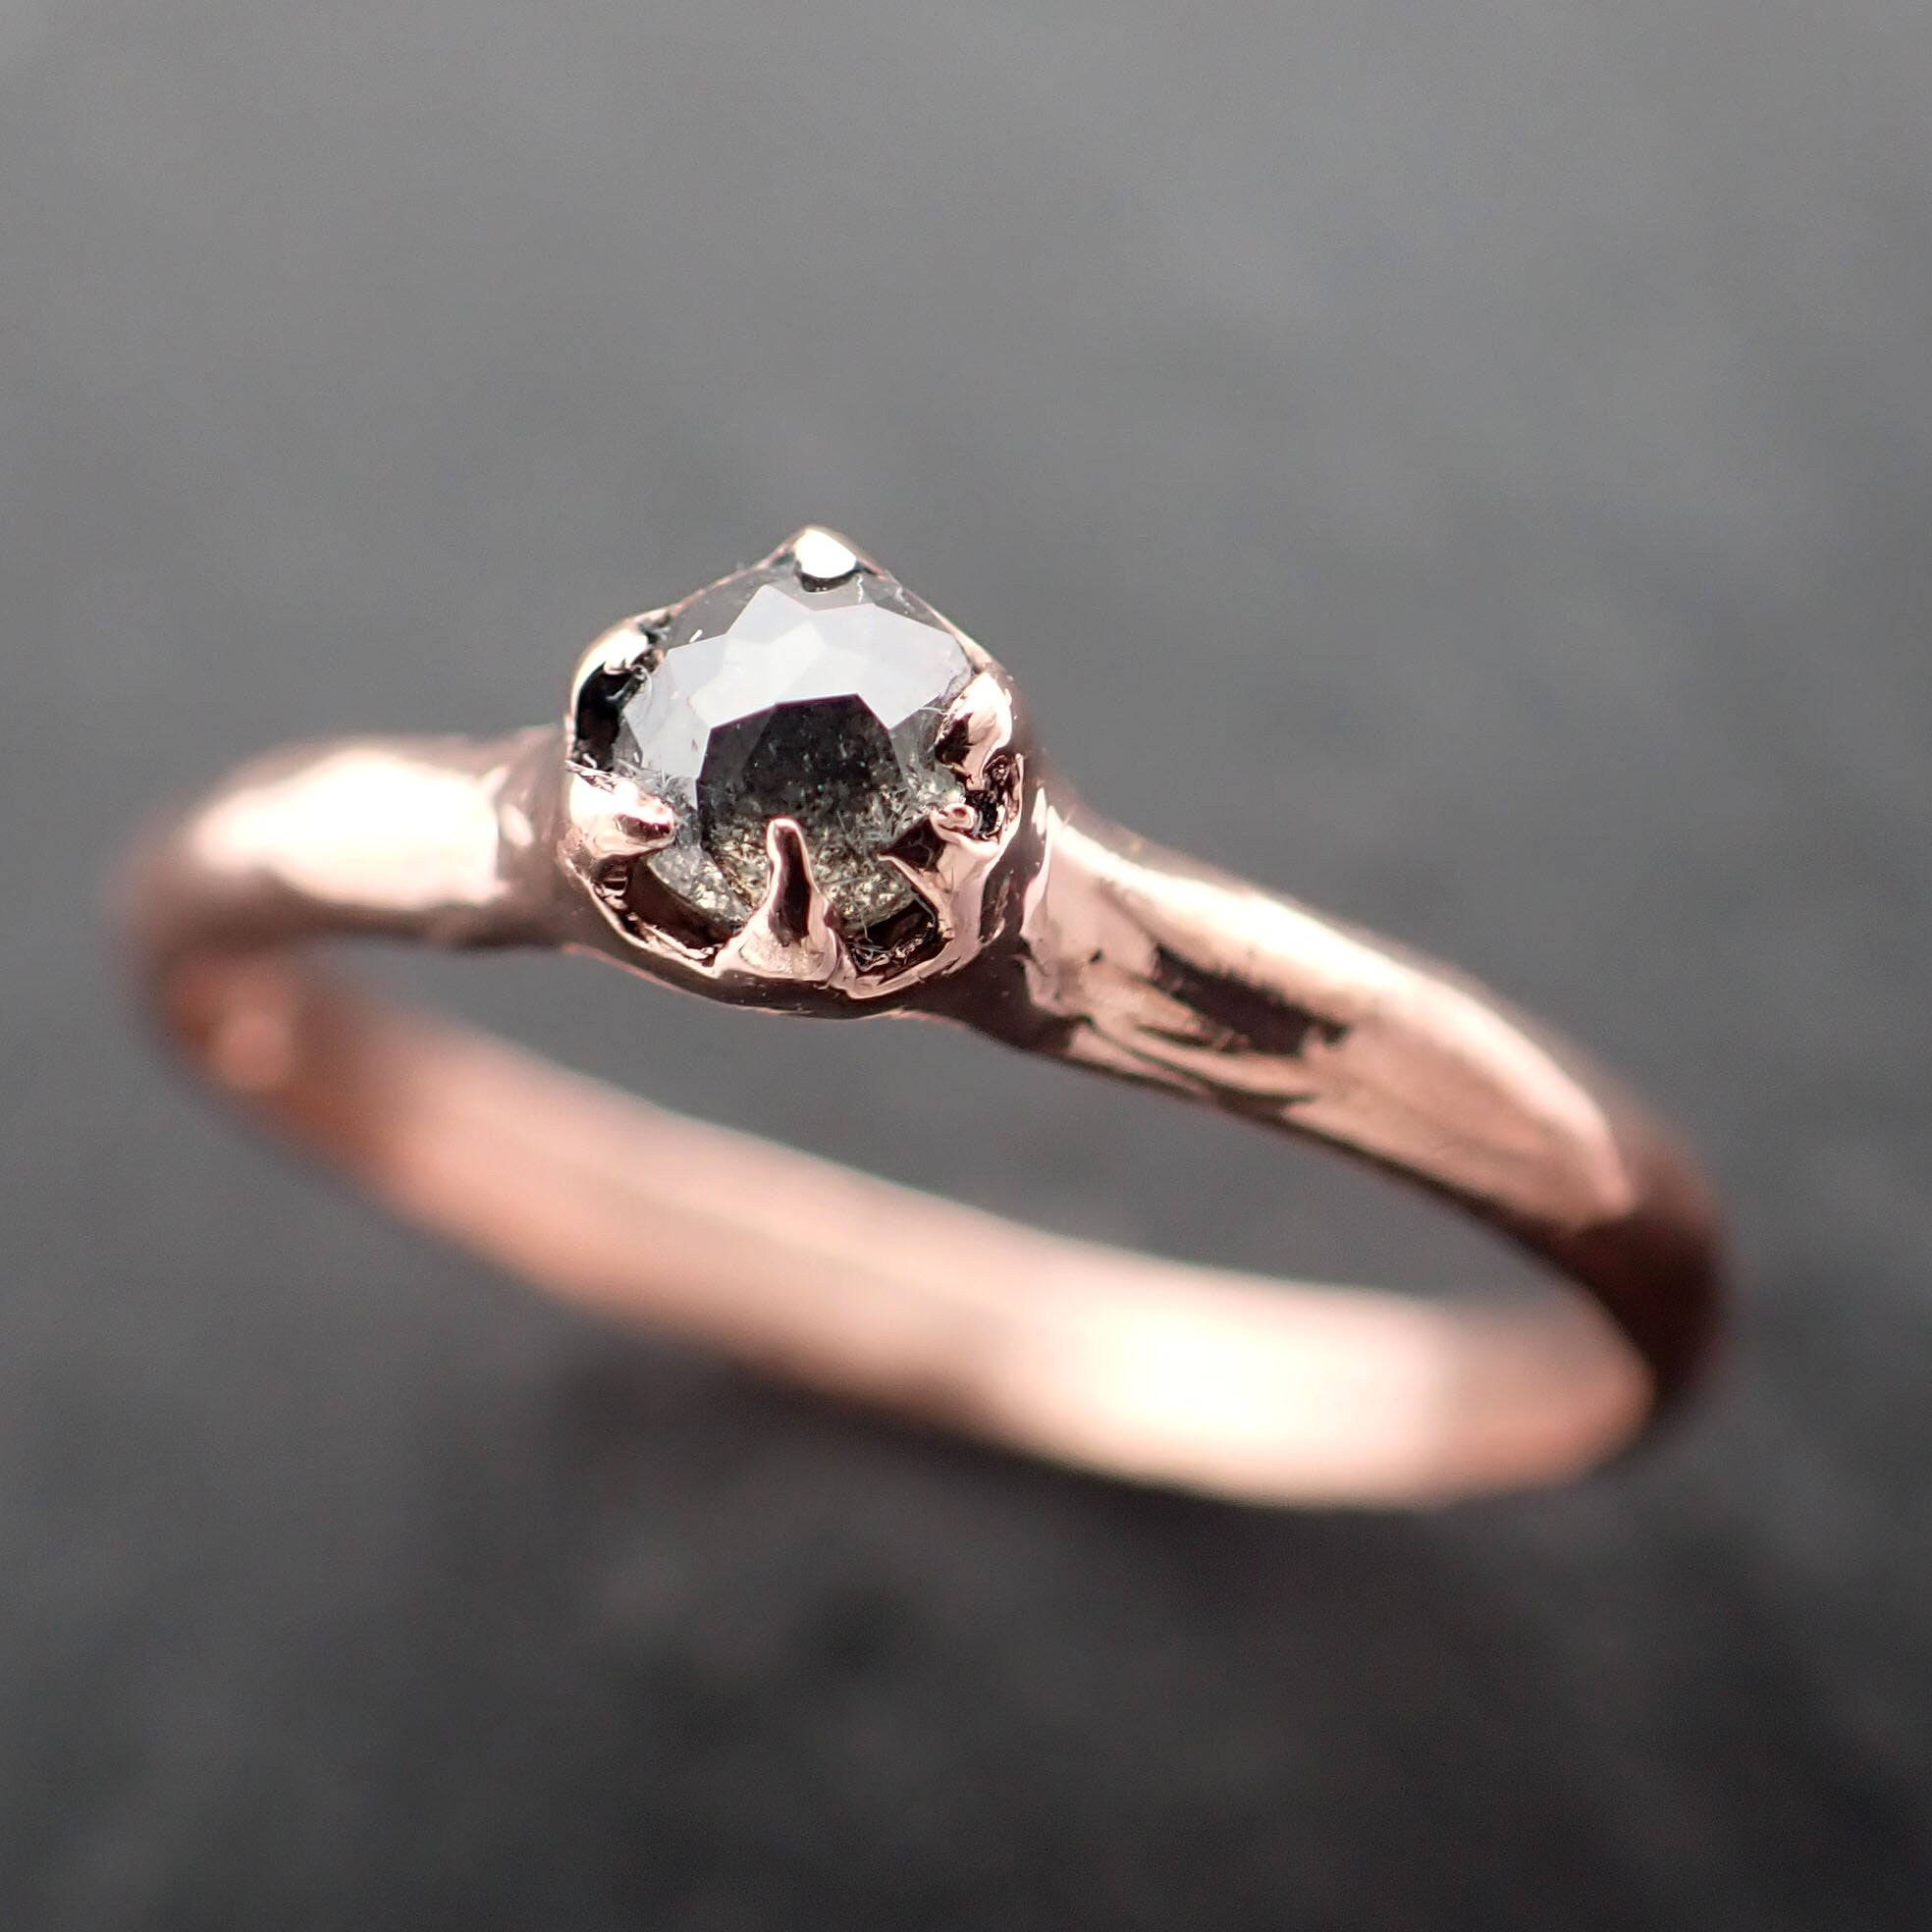 Fancy cut Salt and pepper Solitaire Diamond Engagement 14k Rose Gold Wedding Ring byAngeline 3524